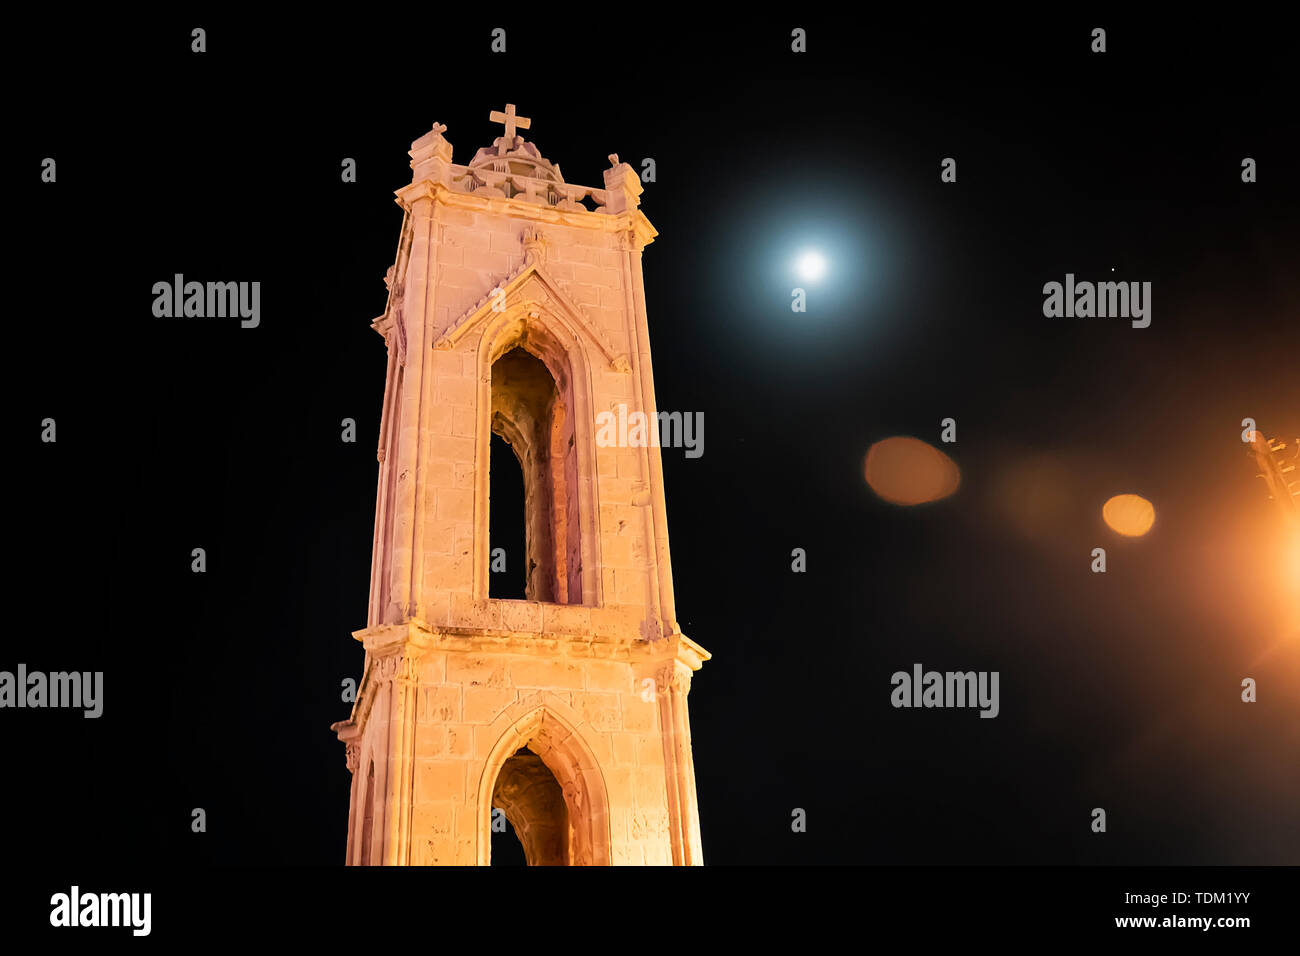 Alte Kirche Bell, Ayia Napa, Zypern. Kapelle in der Nacht gegen den schwarzen Himmel Stockfoto